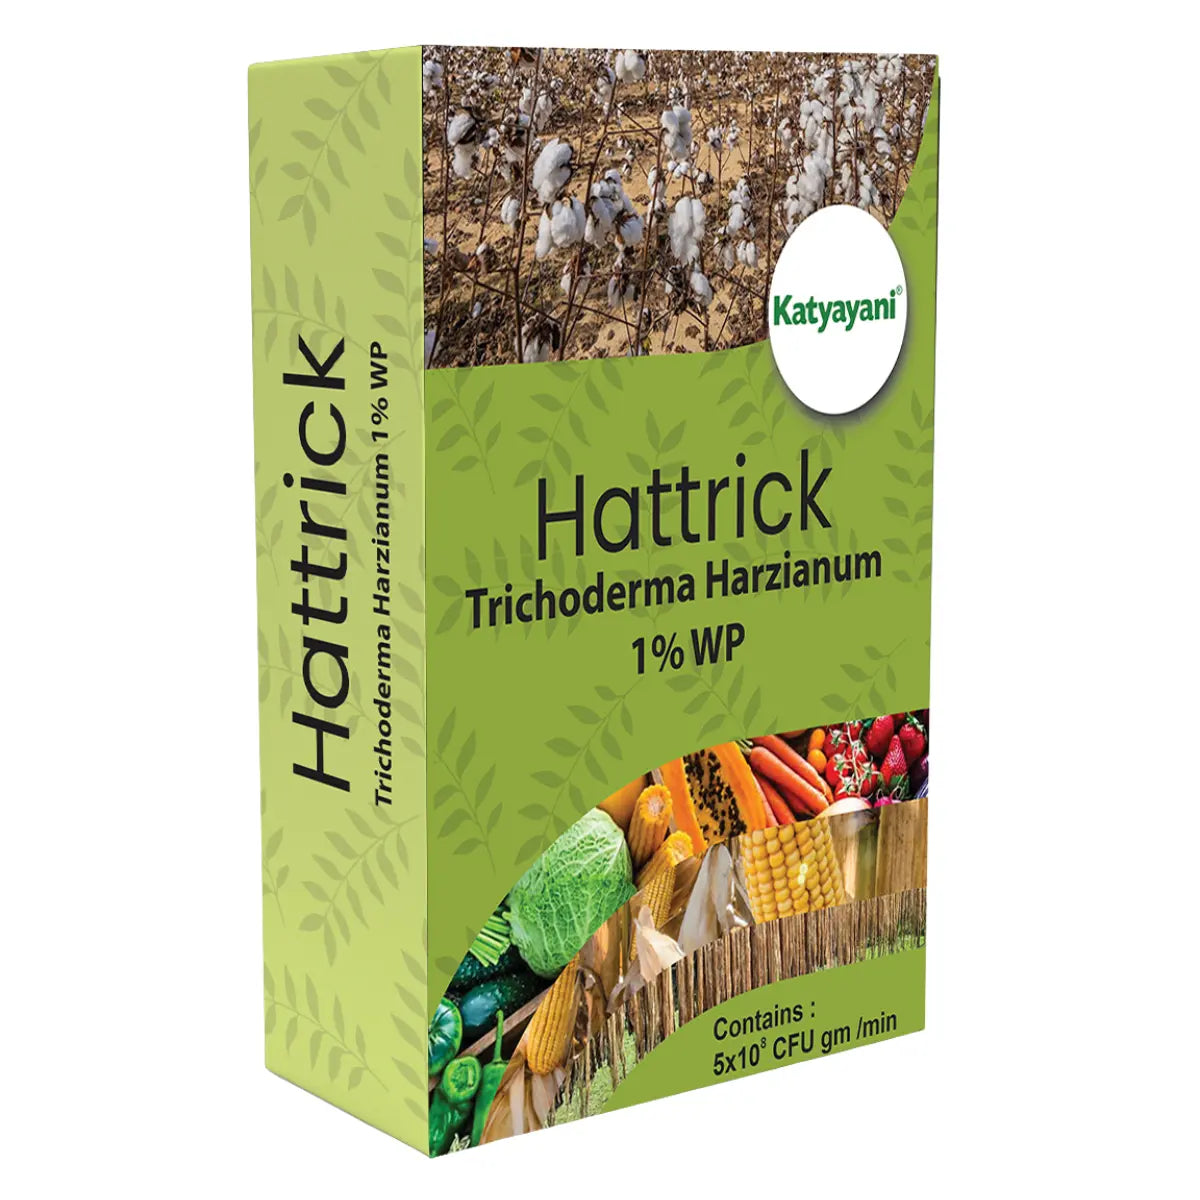 Katyayani Hattrick | Trichoderma harzianum 1% WP | Powder Bio Fungicide